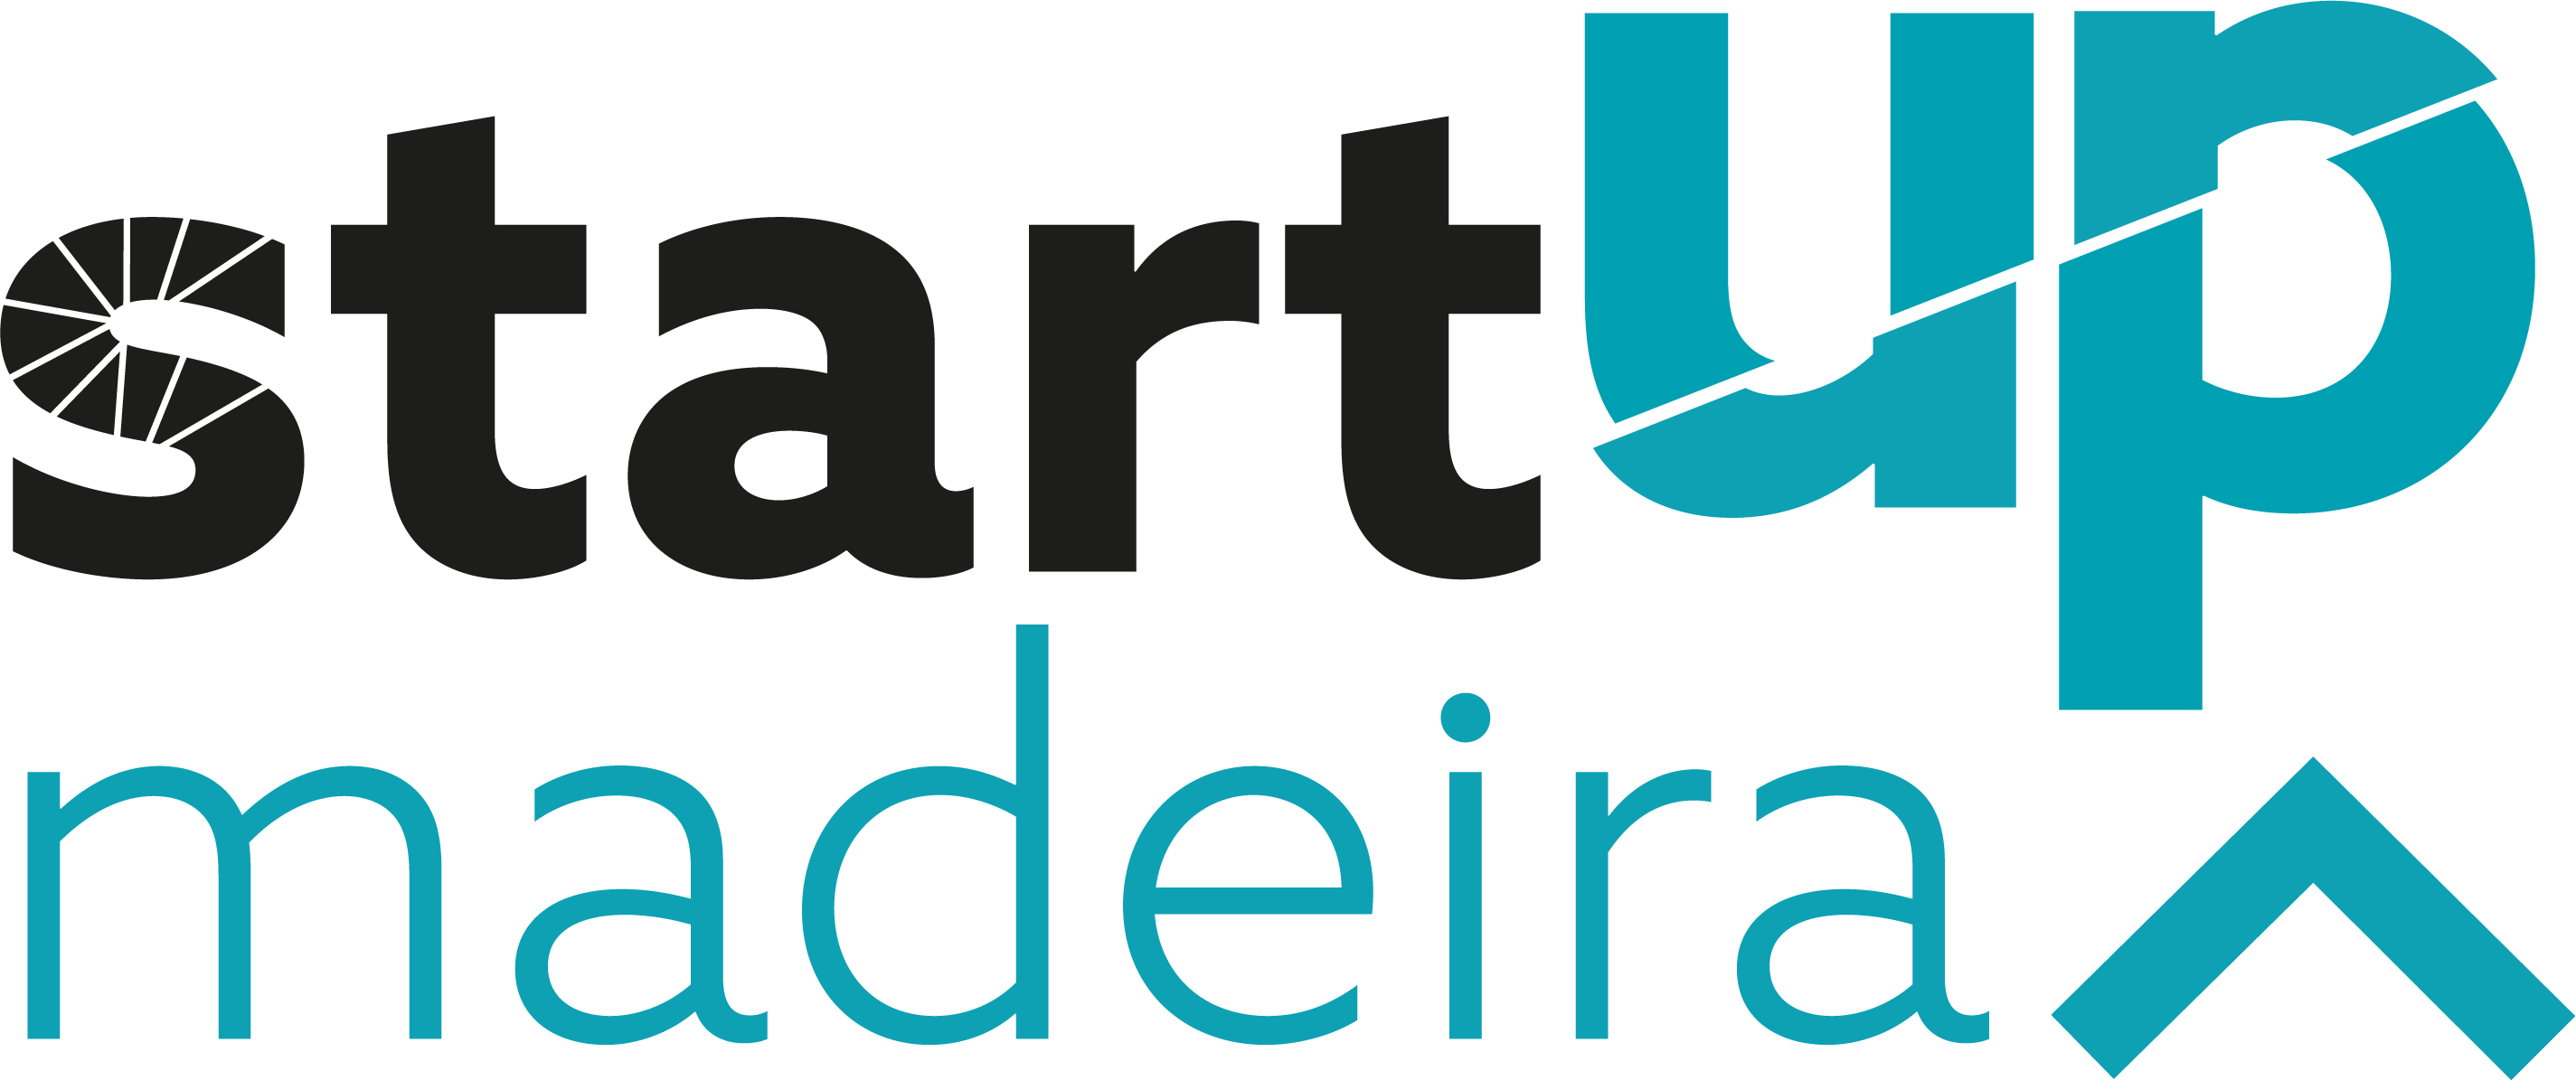 Startup Madeira